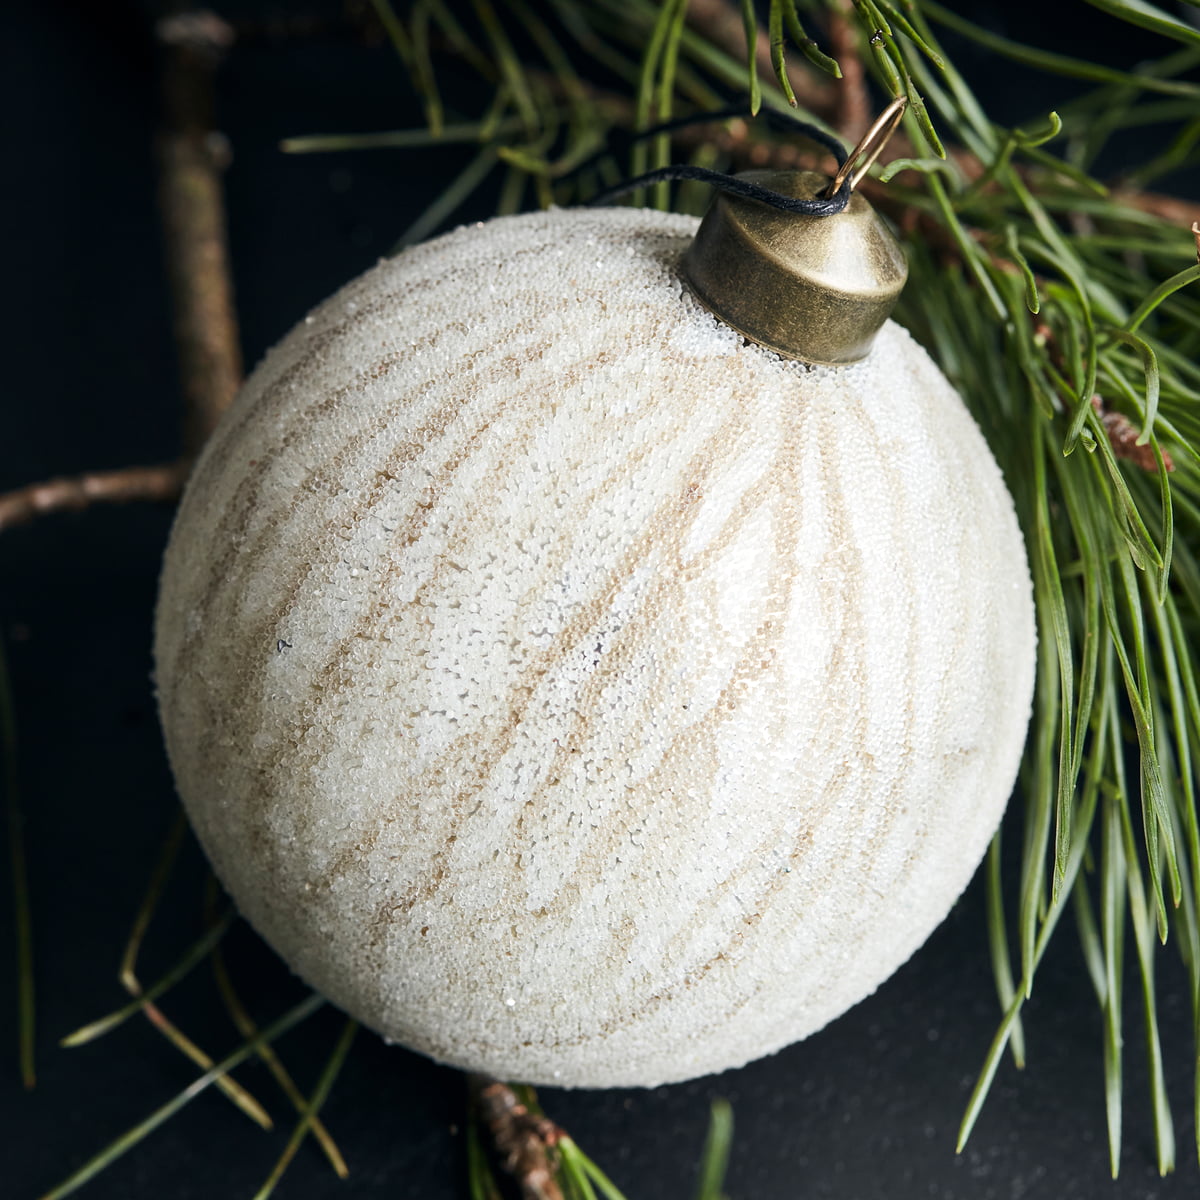 House Doctor - Stripe Christmas tree ball